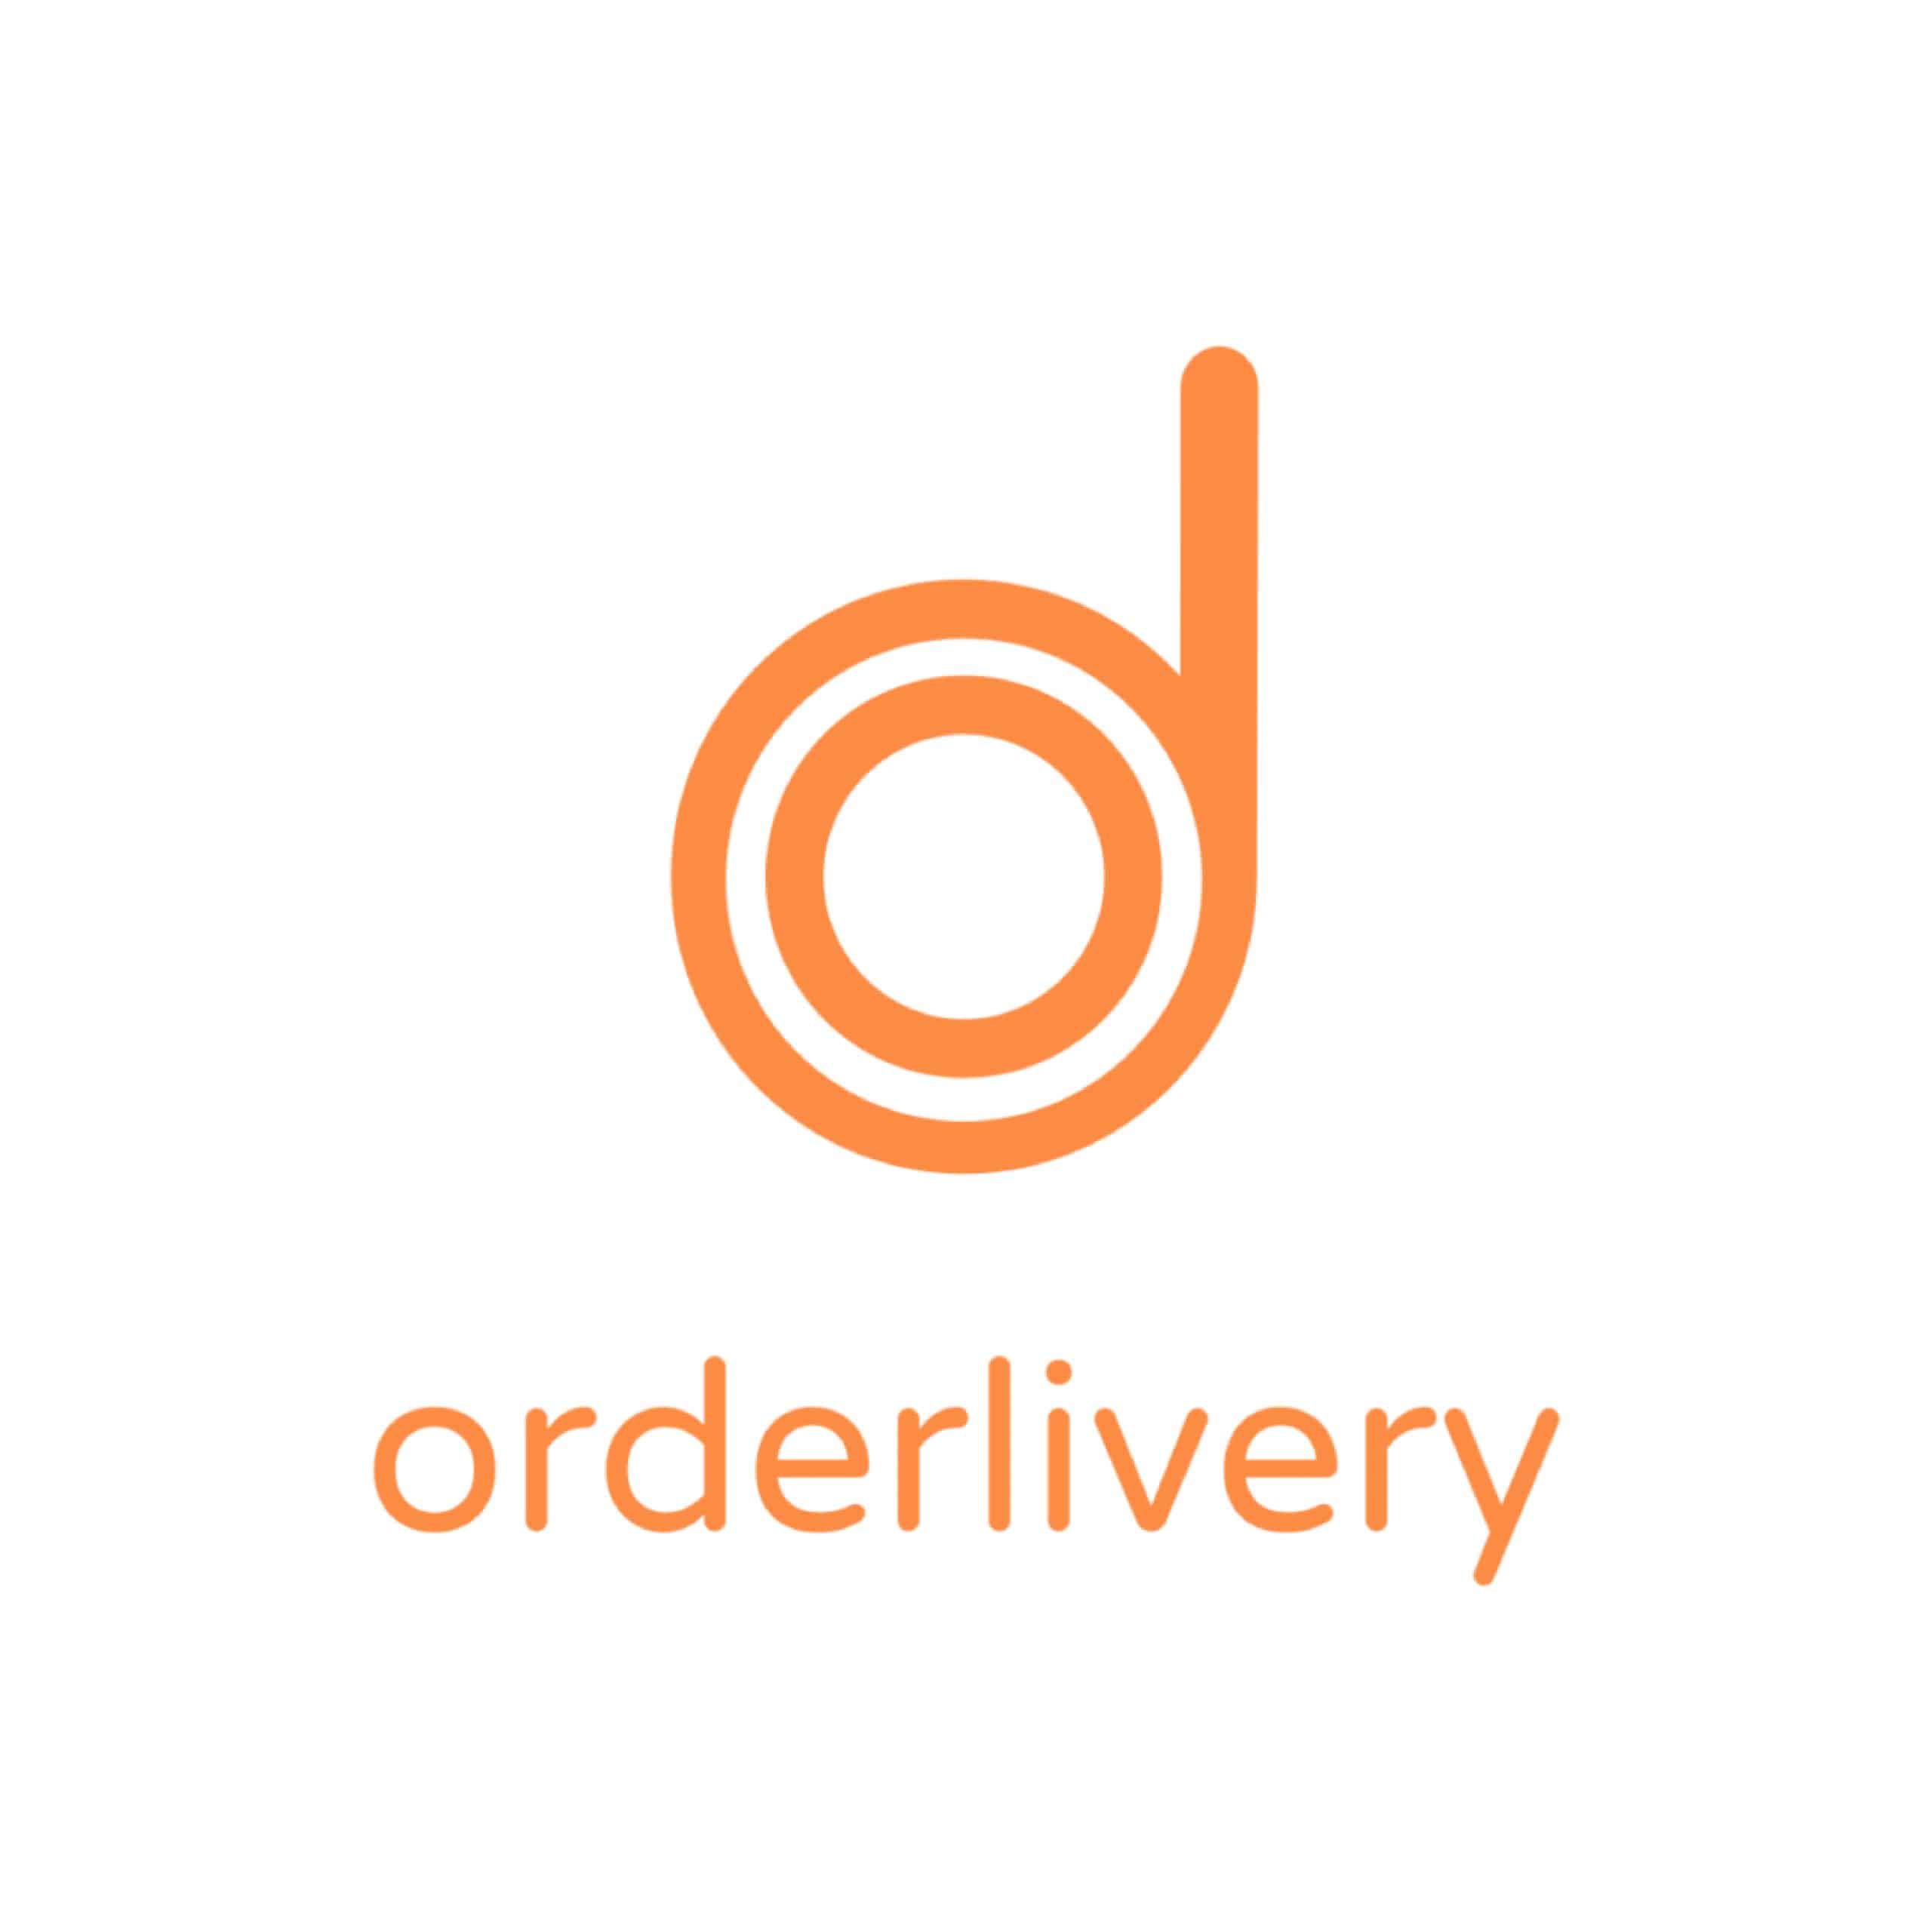 orderlivery logo in orange